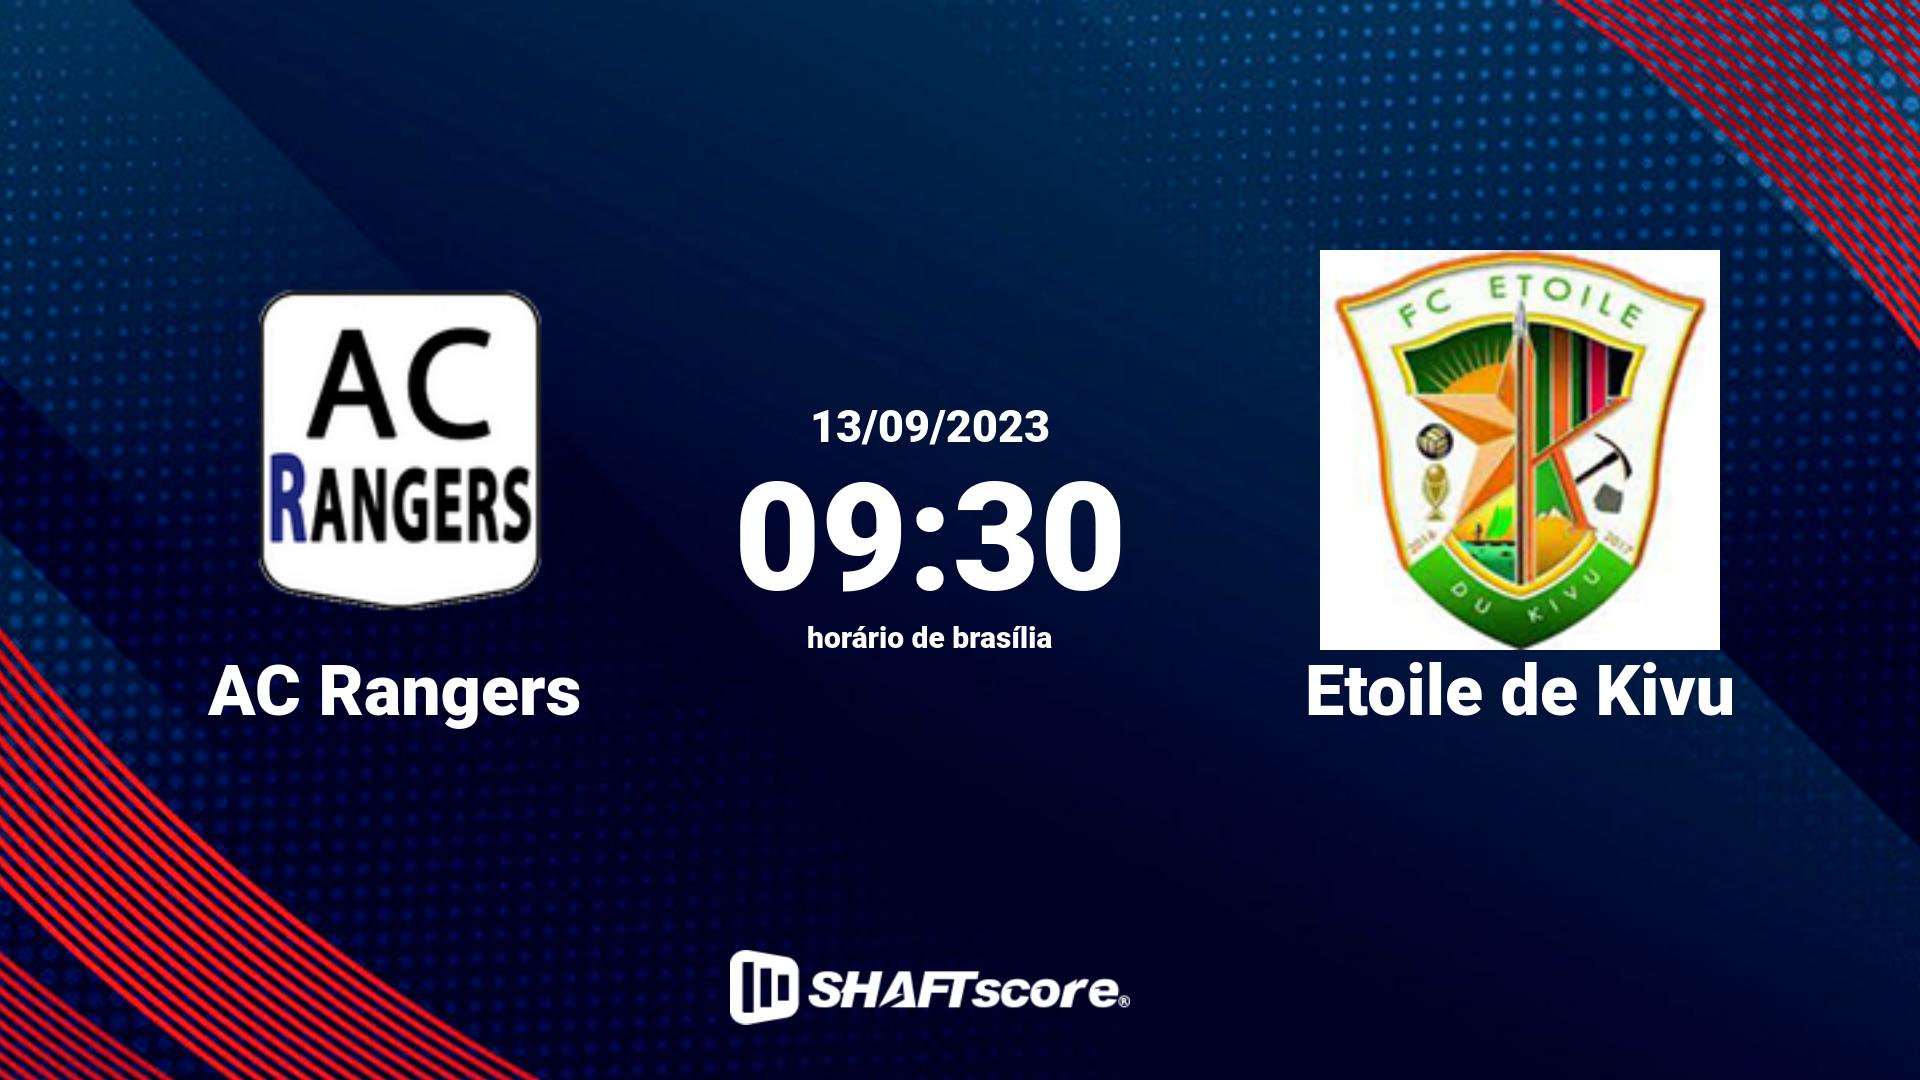 Estatísticas do jogo AC Rangers vs Etoile de Kivu 13.09 09:30